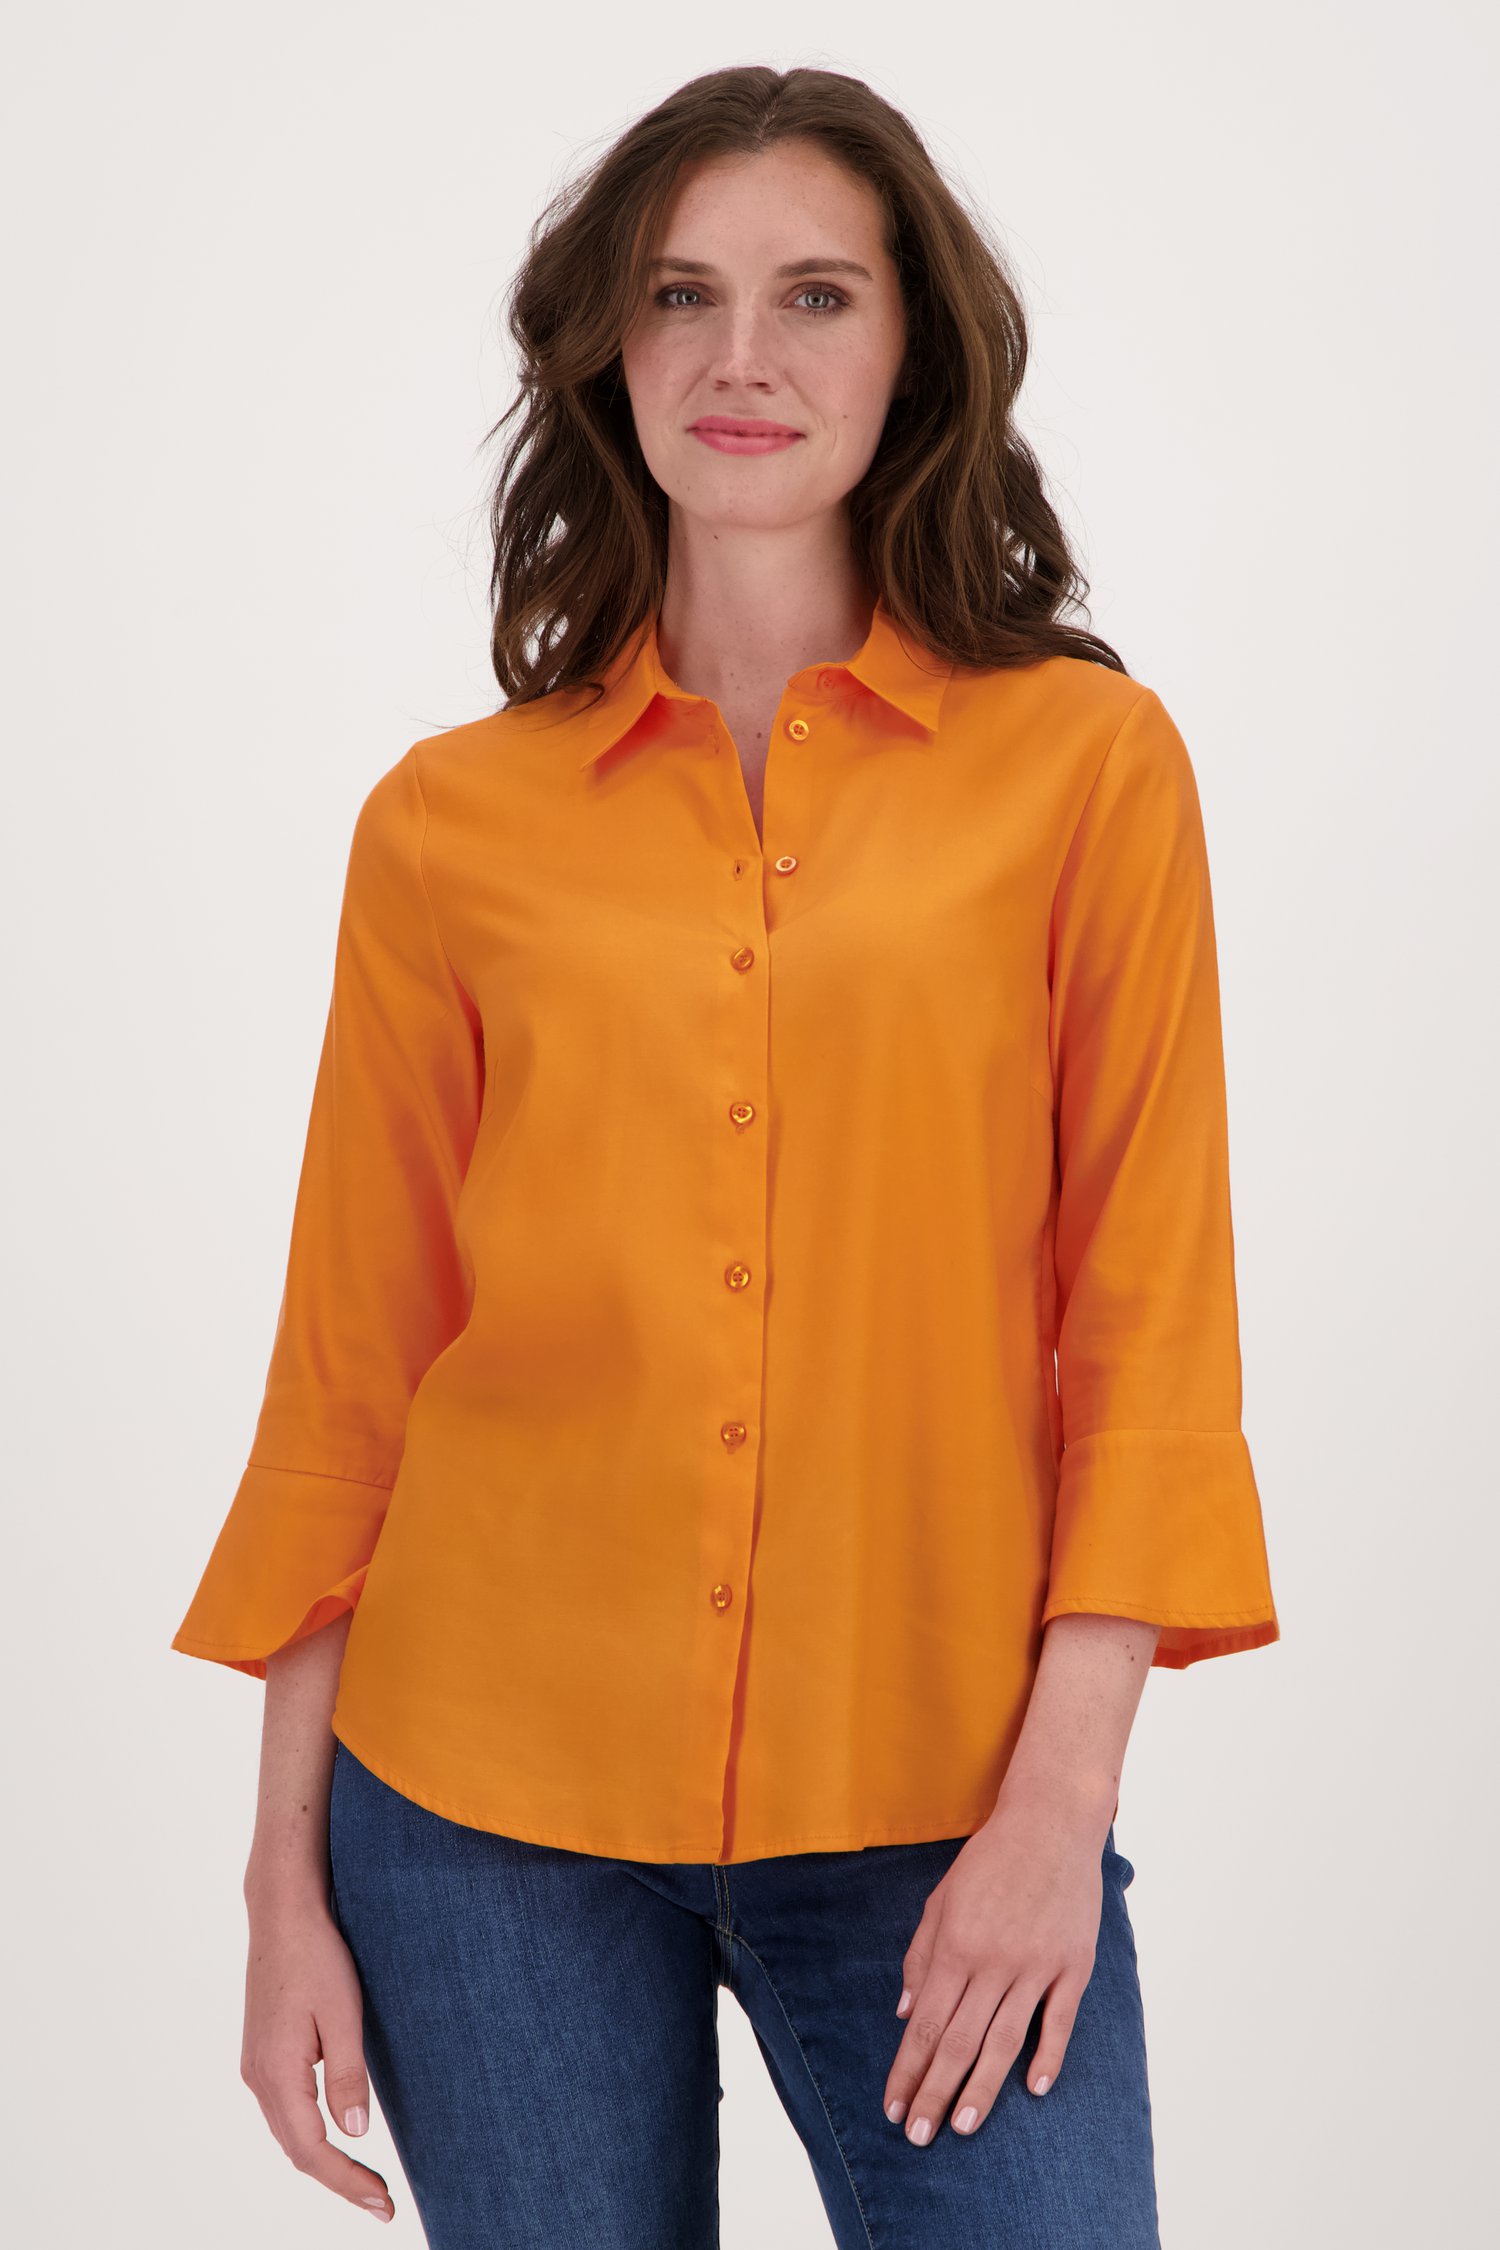 Oranje blouse elegante mouwen van More More | 9866112 | e5